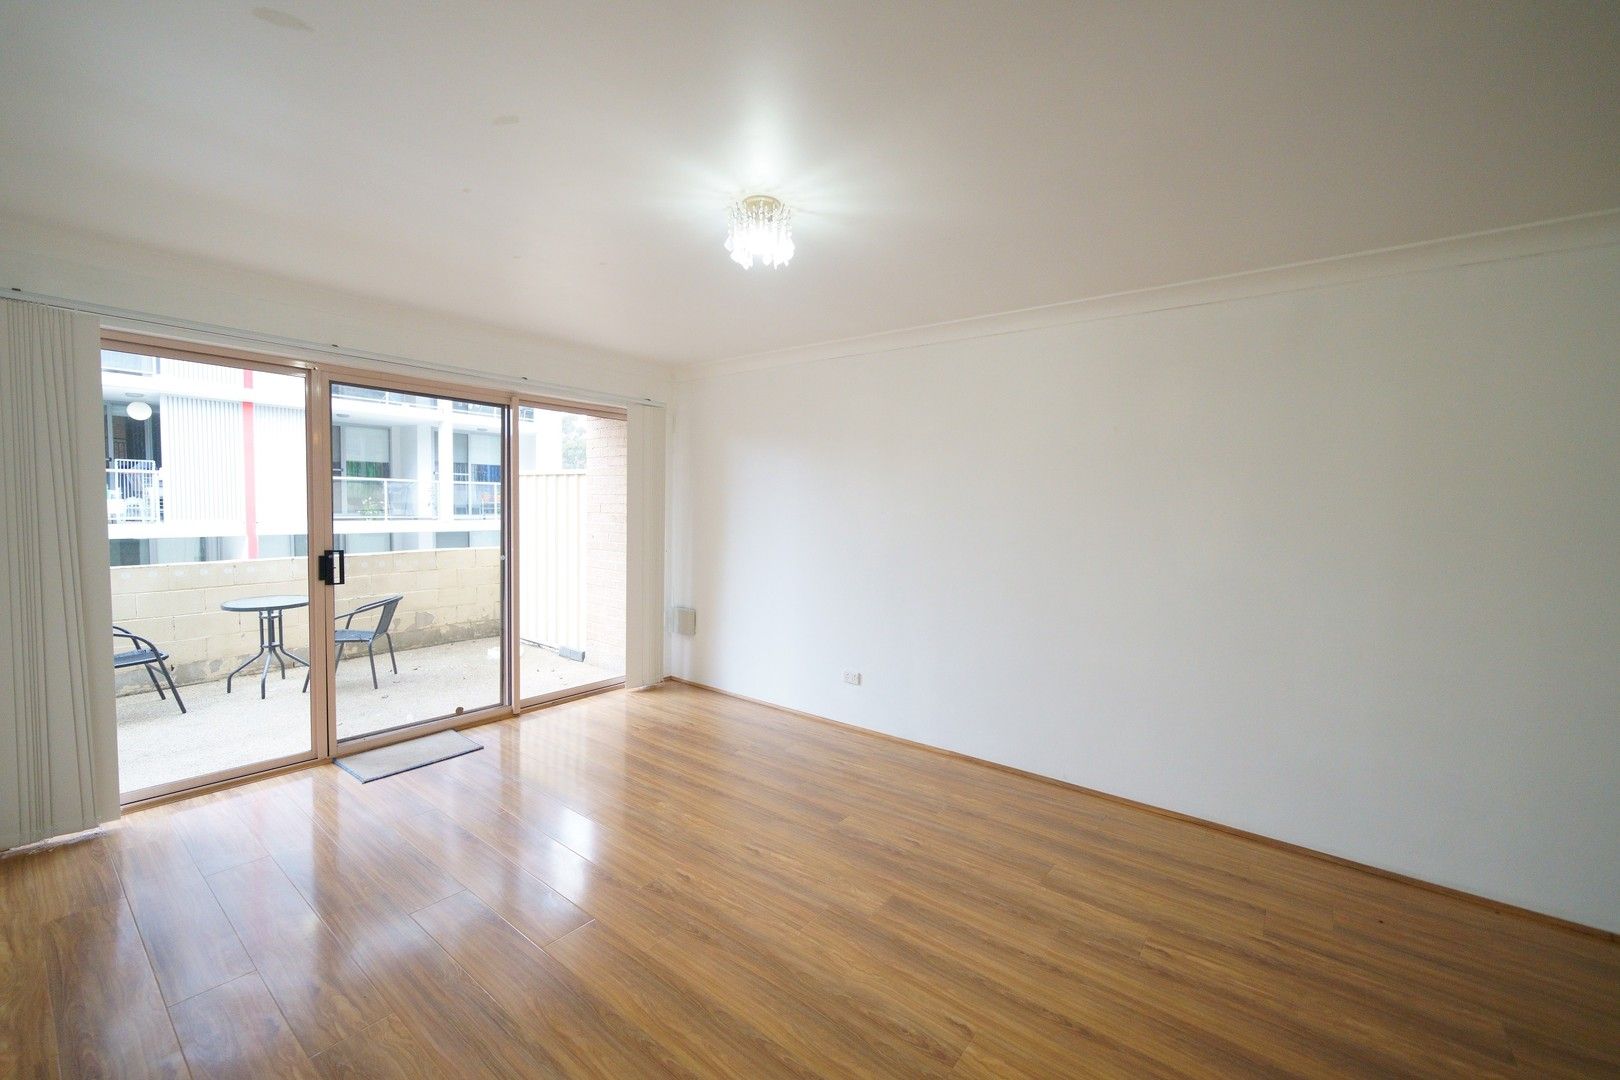 2 bedrooms Apartment / Unit / Flat in Level 1, 11/11 Macquarie Road AUBURN NSW, 2144